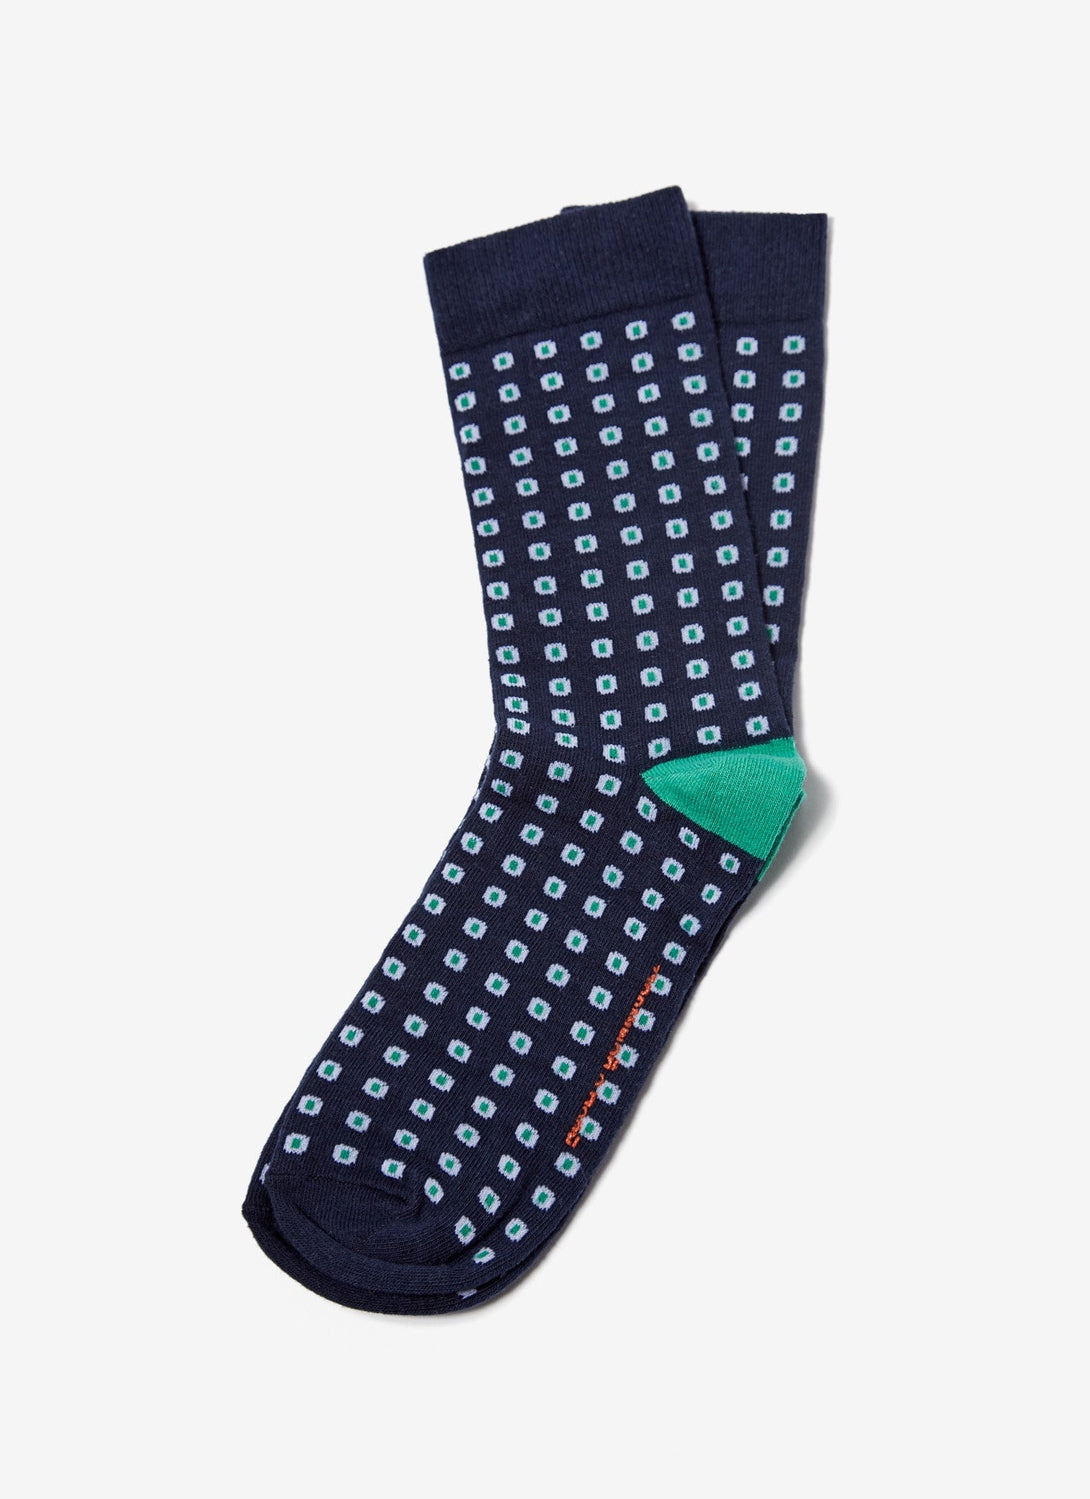 Men Socks | Navy Blue/White Socks With Geometric Motif by Spanish designer Adolfo Dominguez